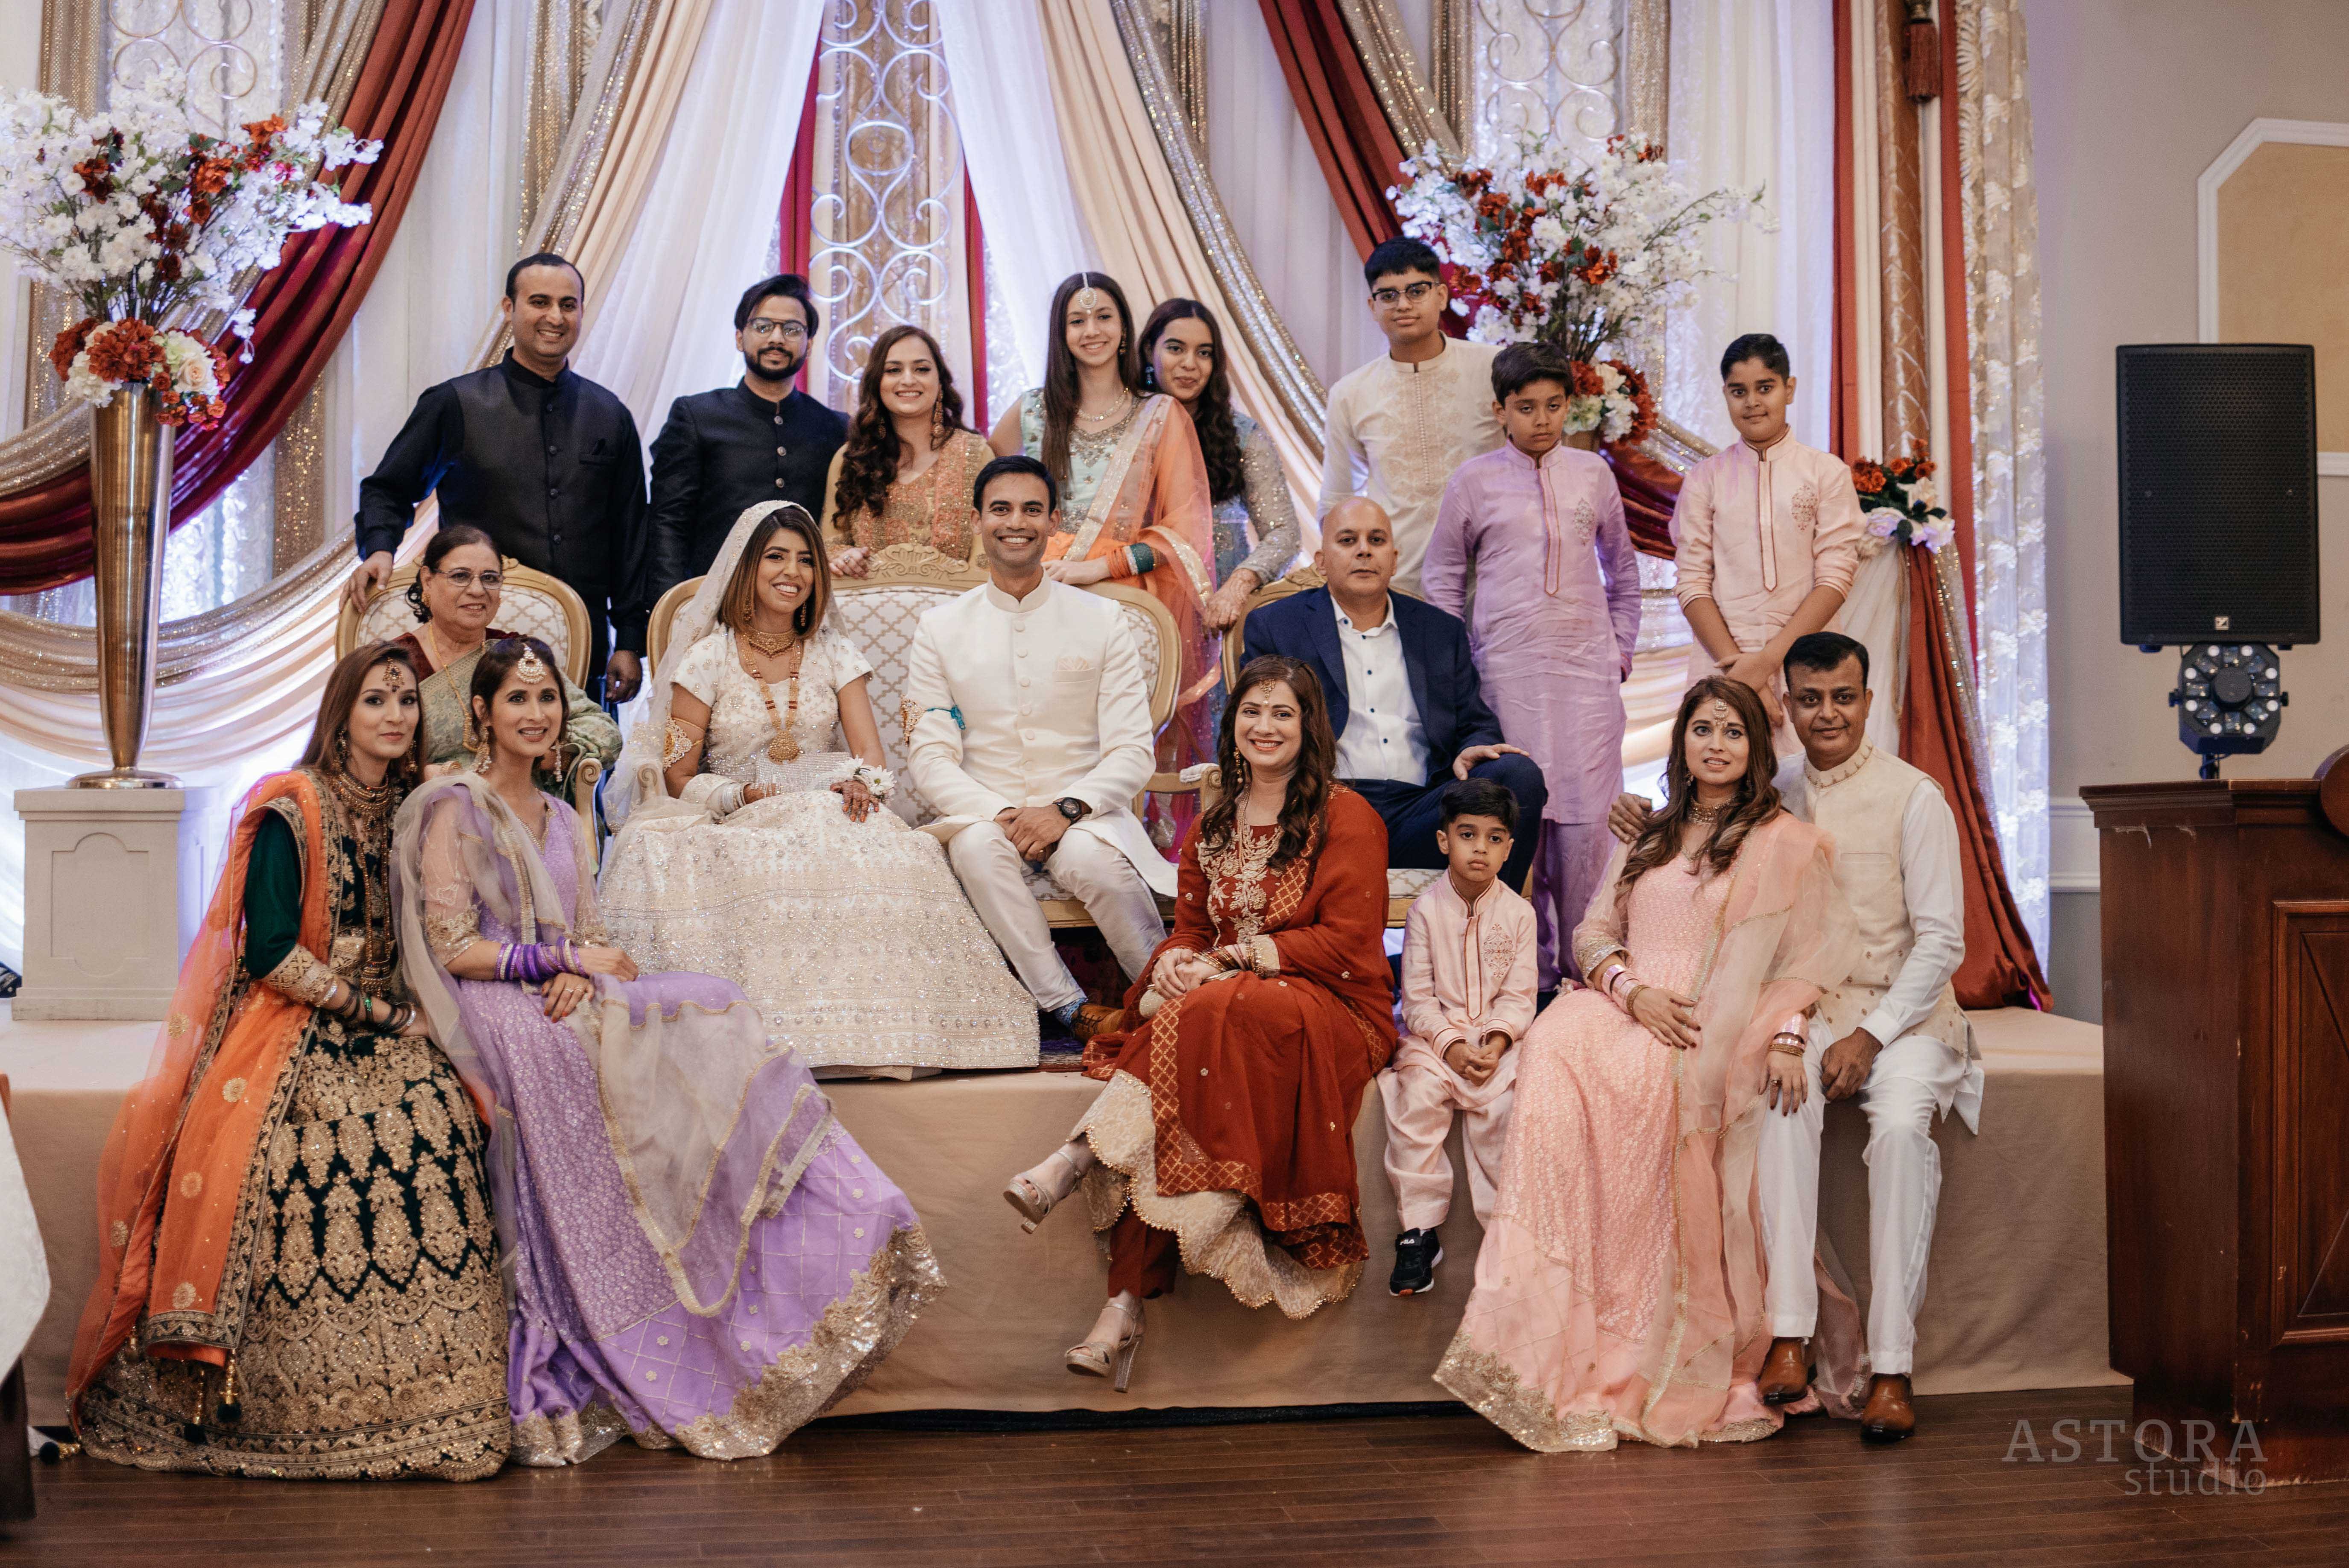 South Asian marriage image Toronto | Astora Studio